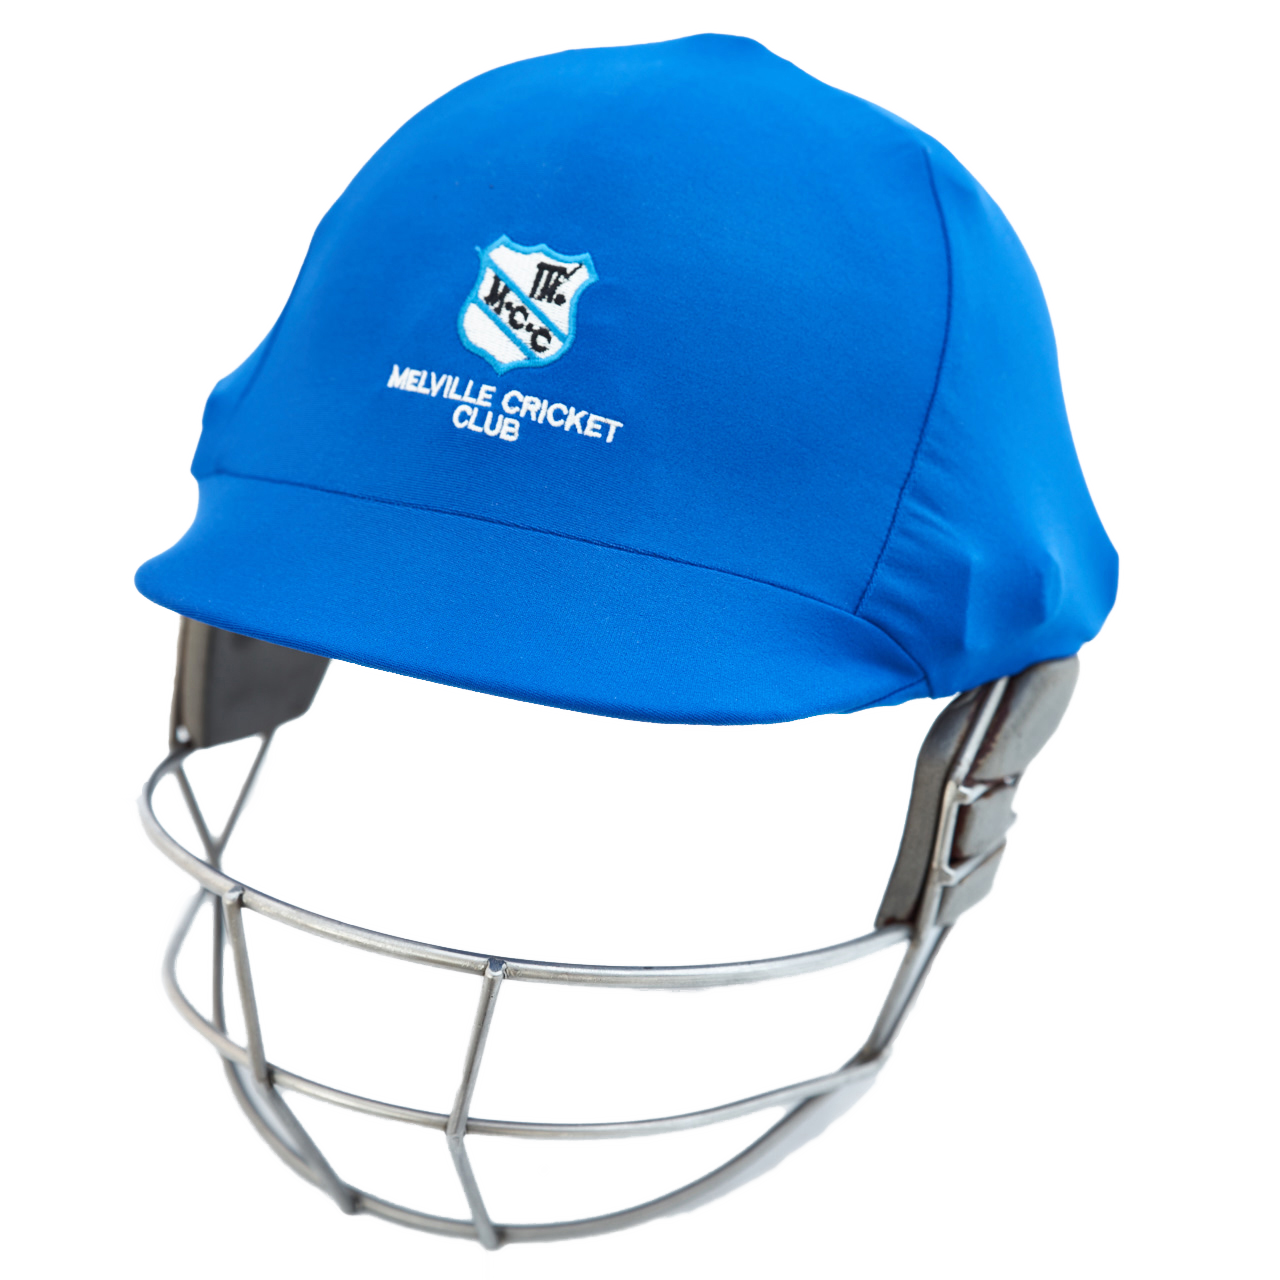 Cricket Helm PNG-Bild transparent